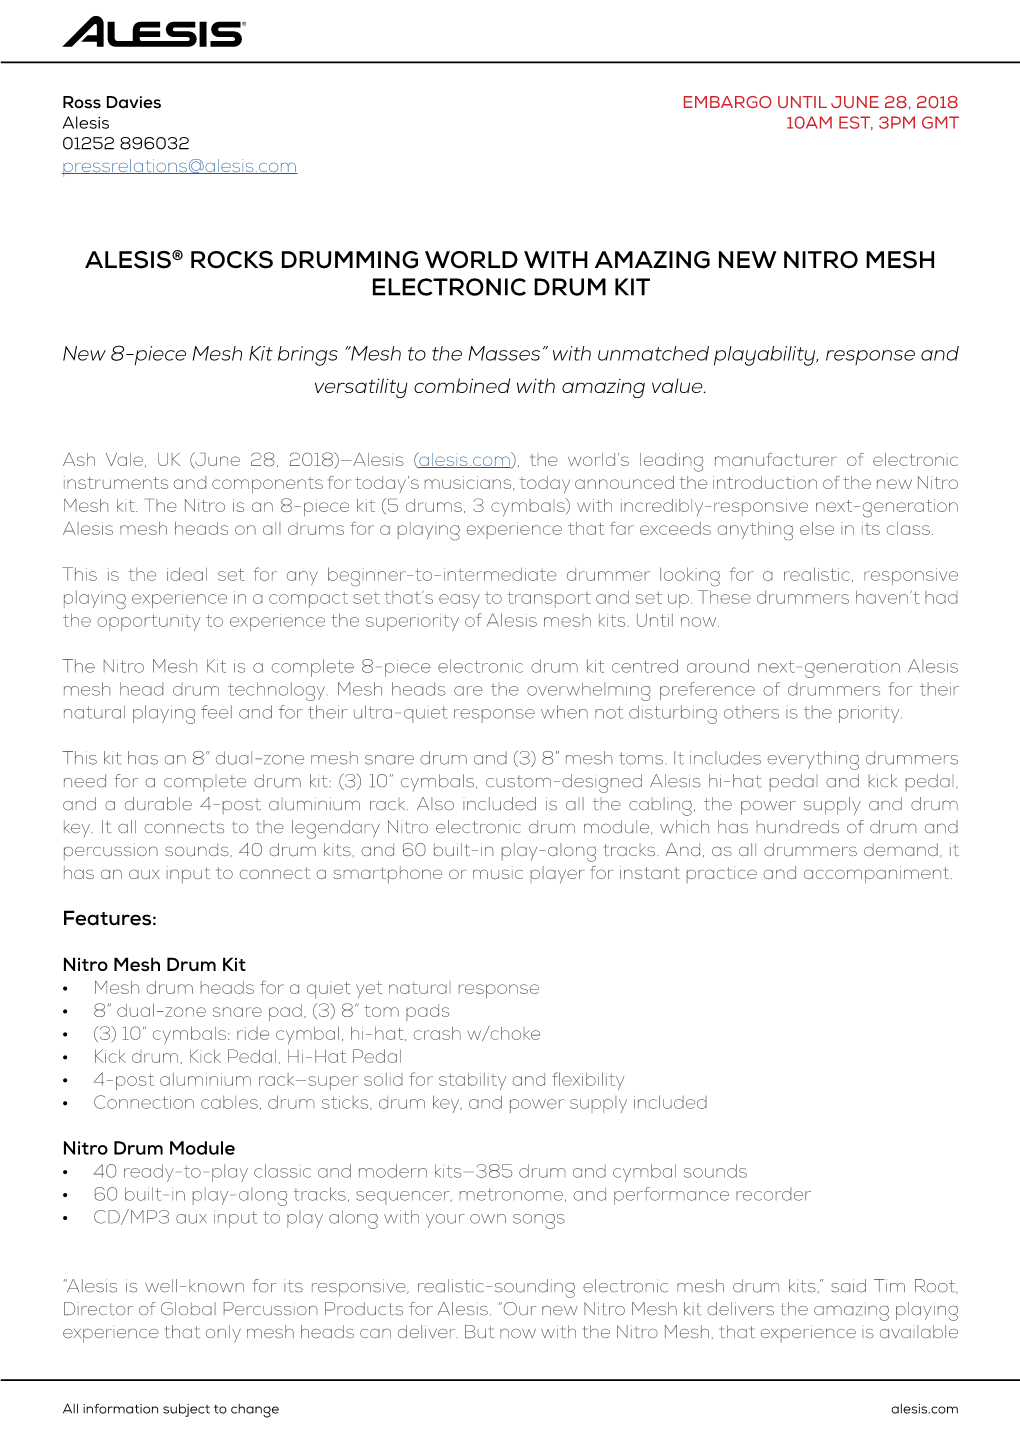 Alesis® Rocks Drumming World with Amazing New Nitro Mesh Electronic Drum Kit